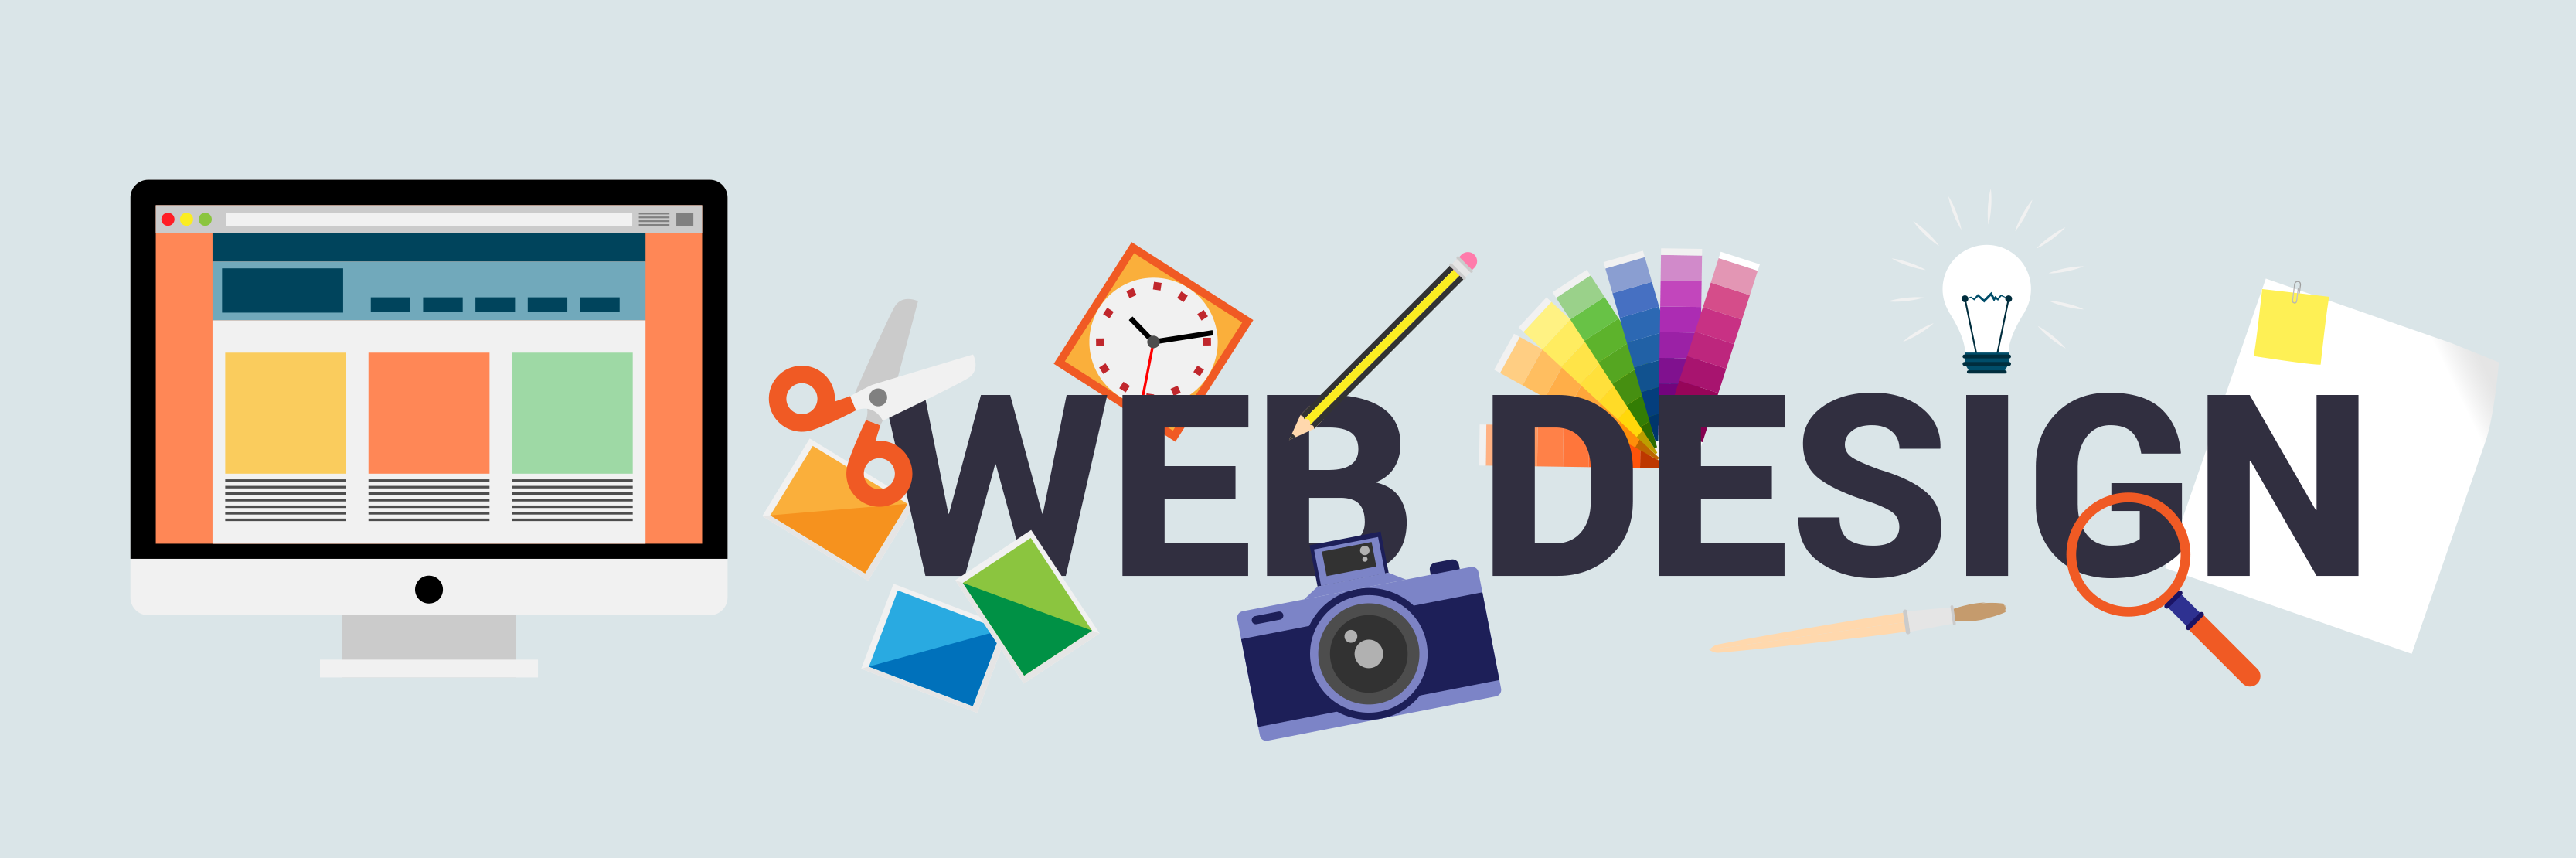 NetWeaver Design - Digital Creative Studio | Web Design Bedford ...